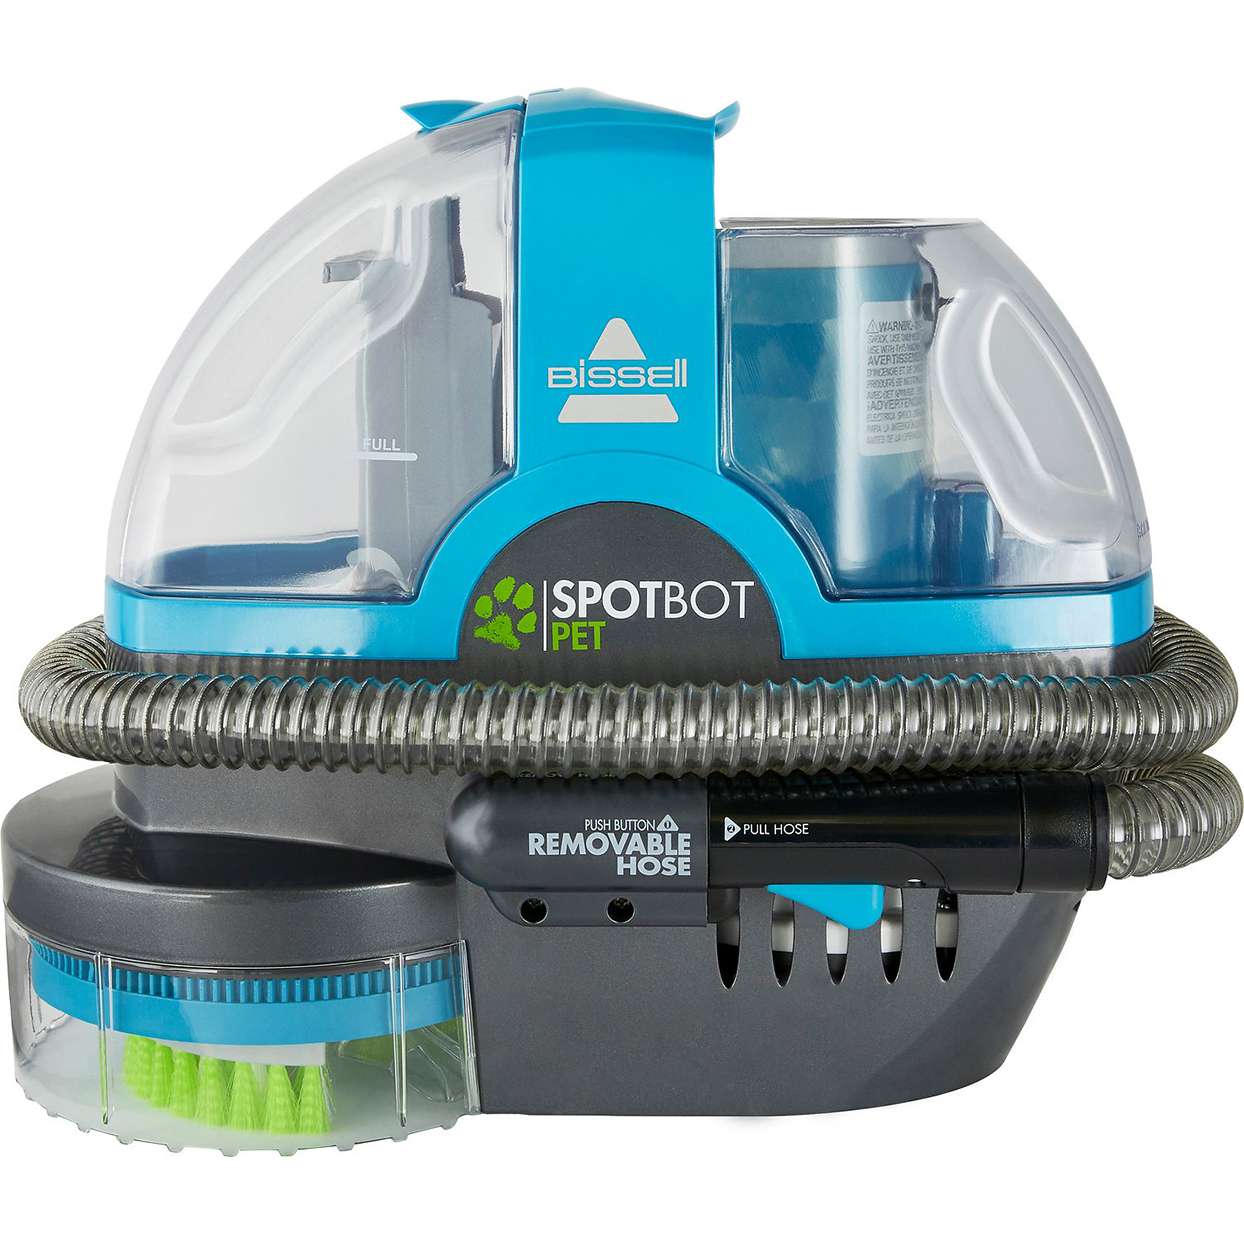 bissell spotbot portable carpet cleaner